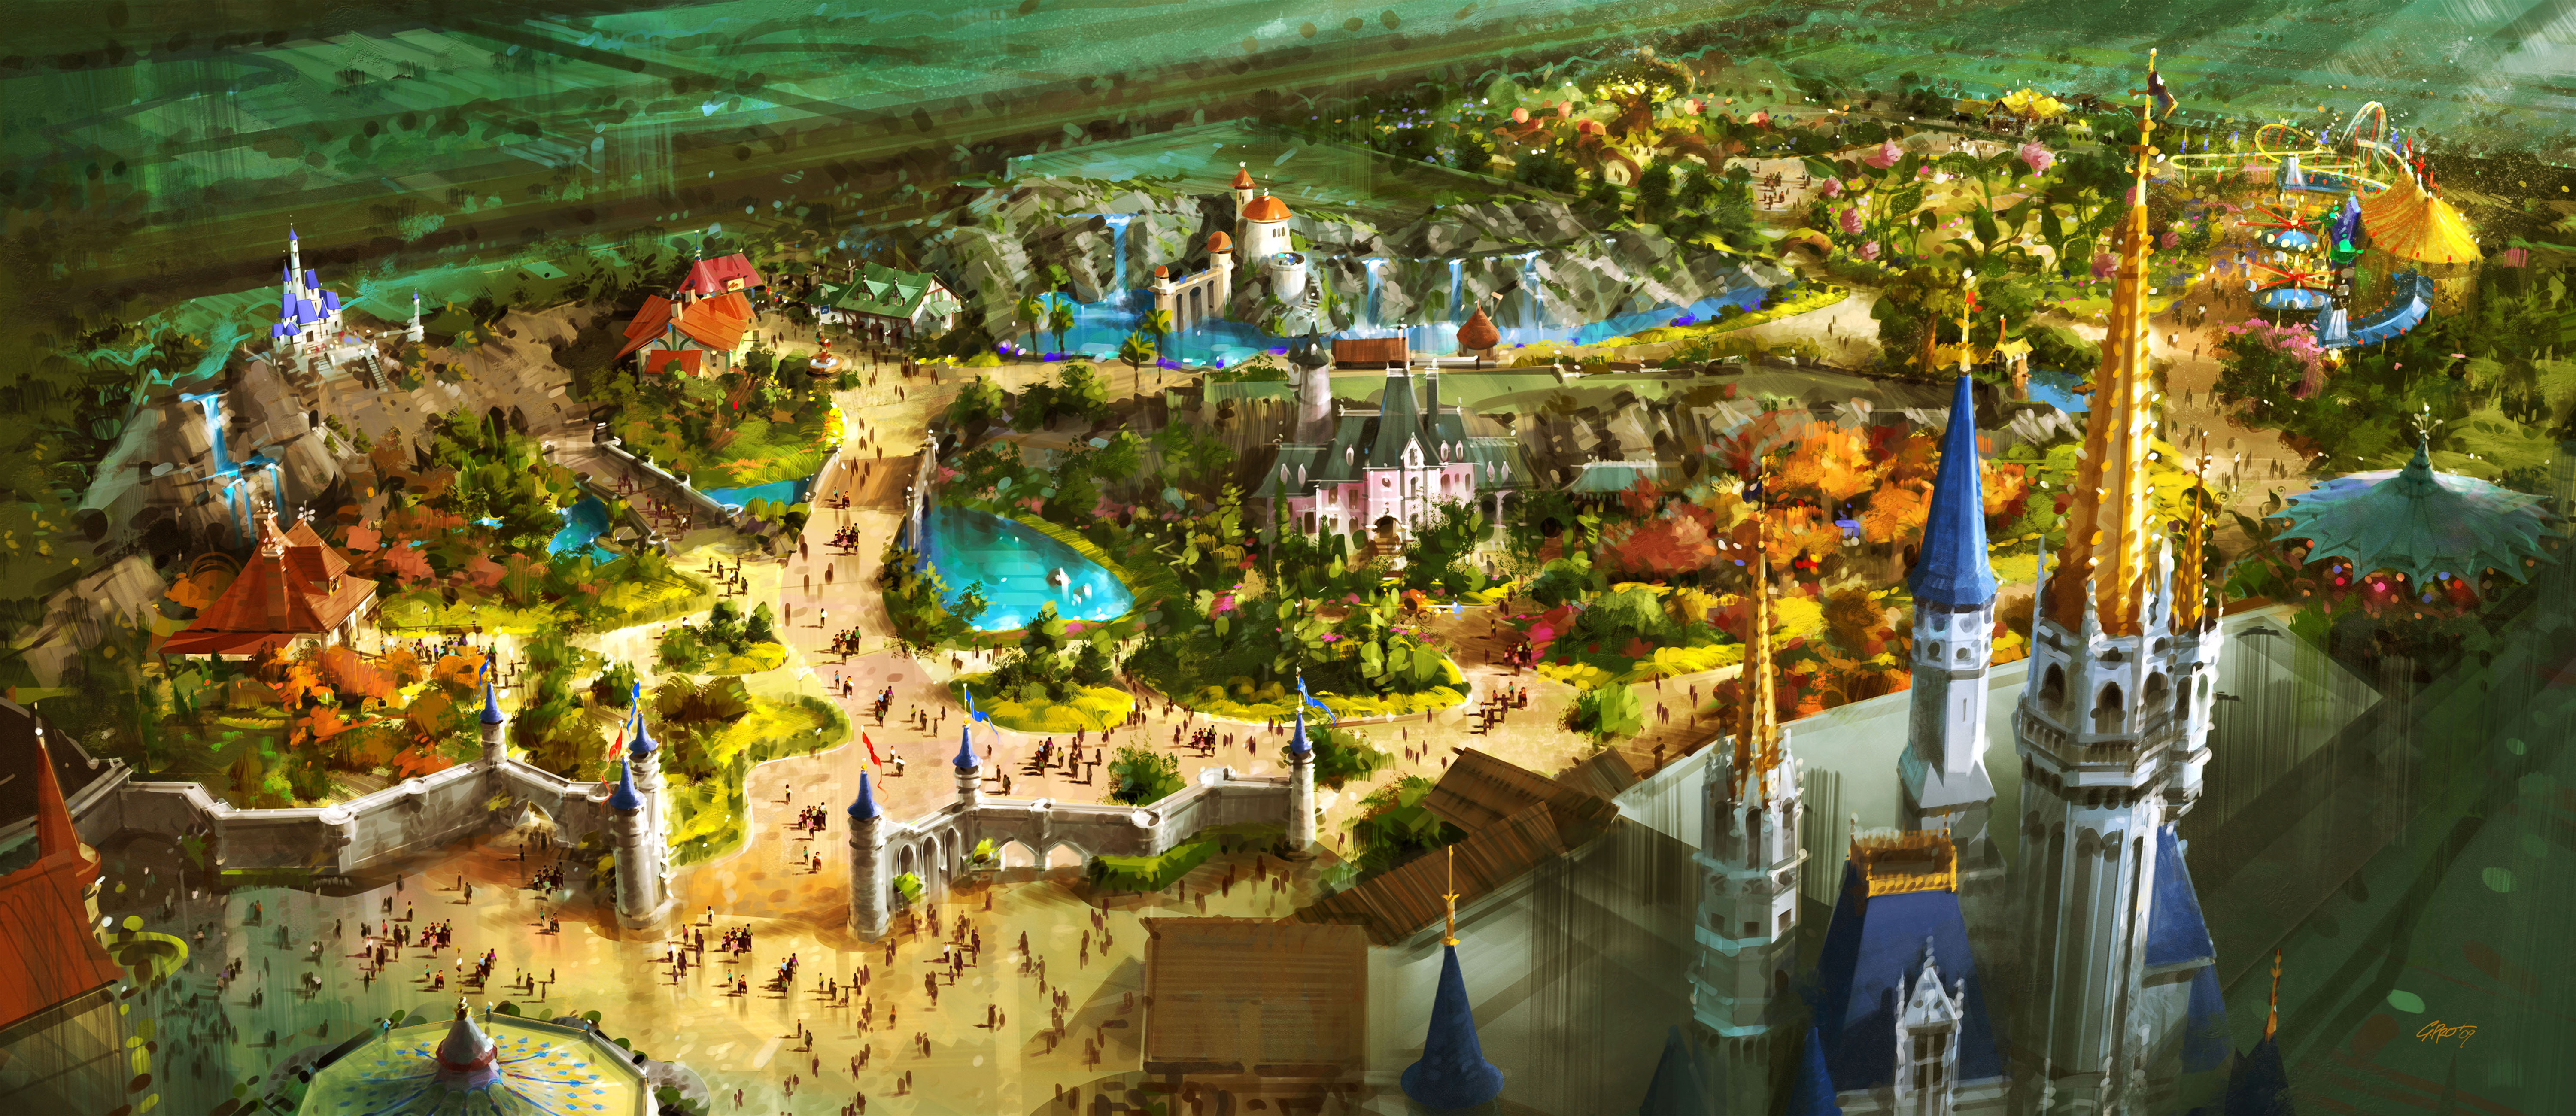 D23 Confirms Fantasyland Expansion Rumors | The Disney Blog